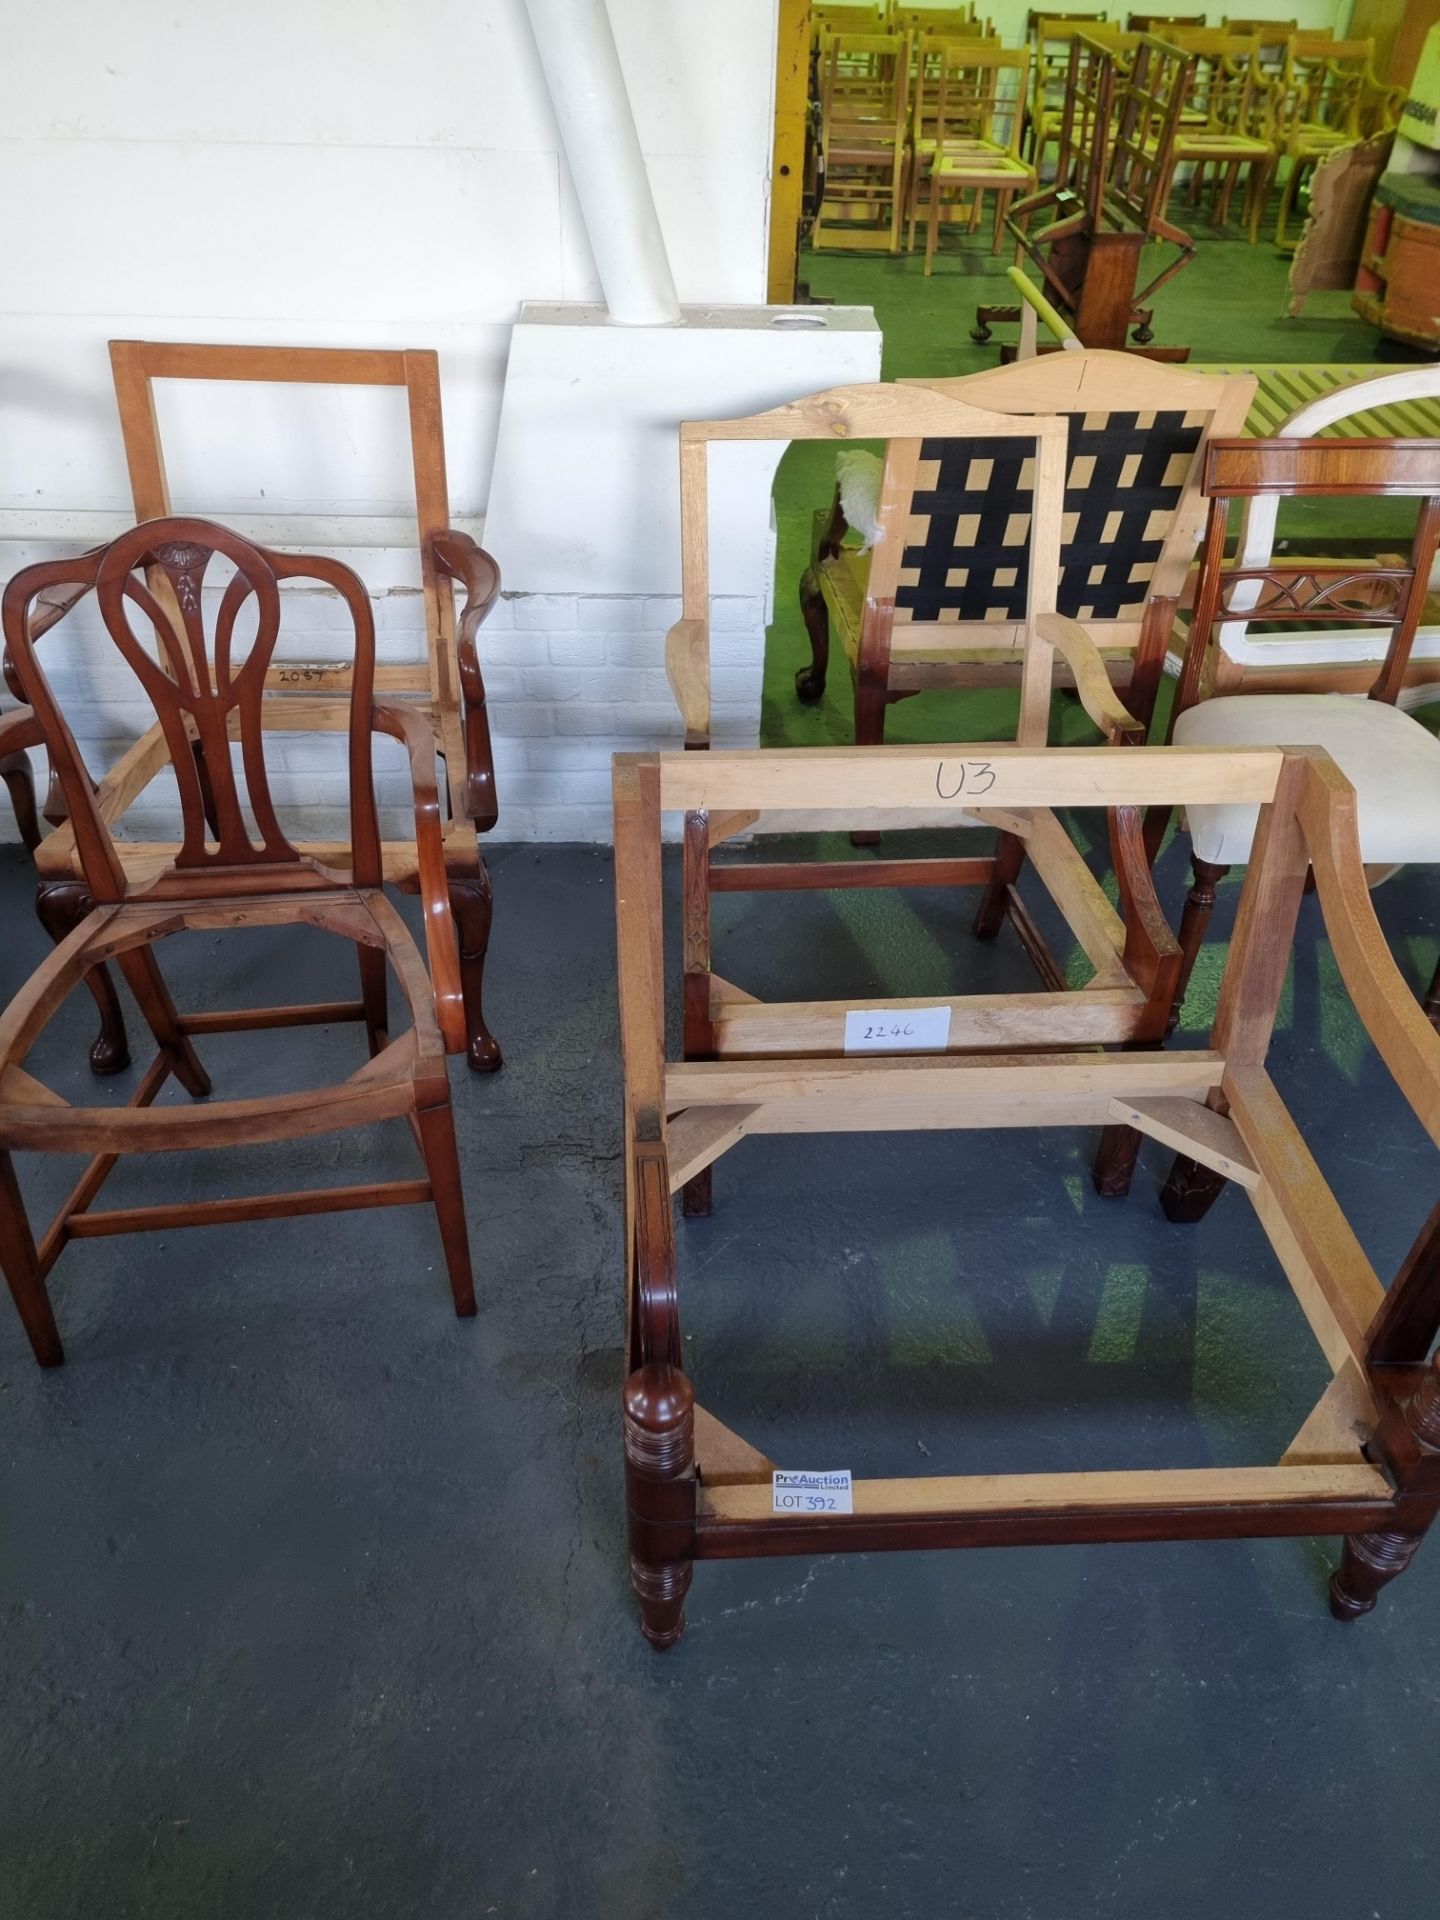 4x Assortment of Arthur Brett Chairs